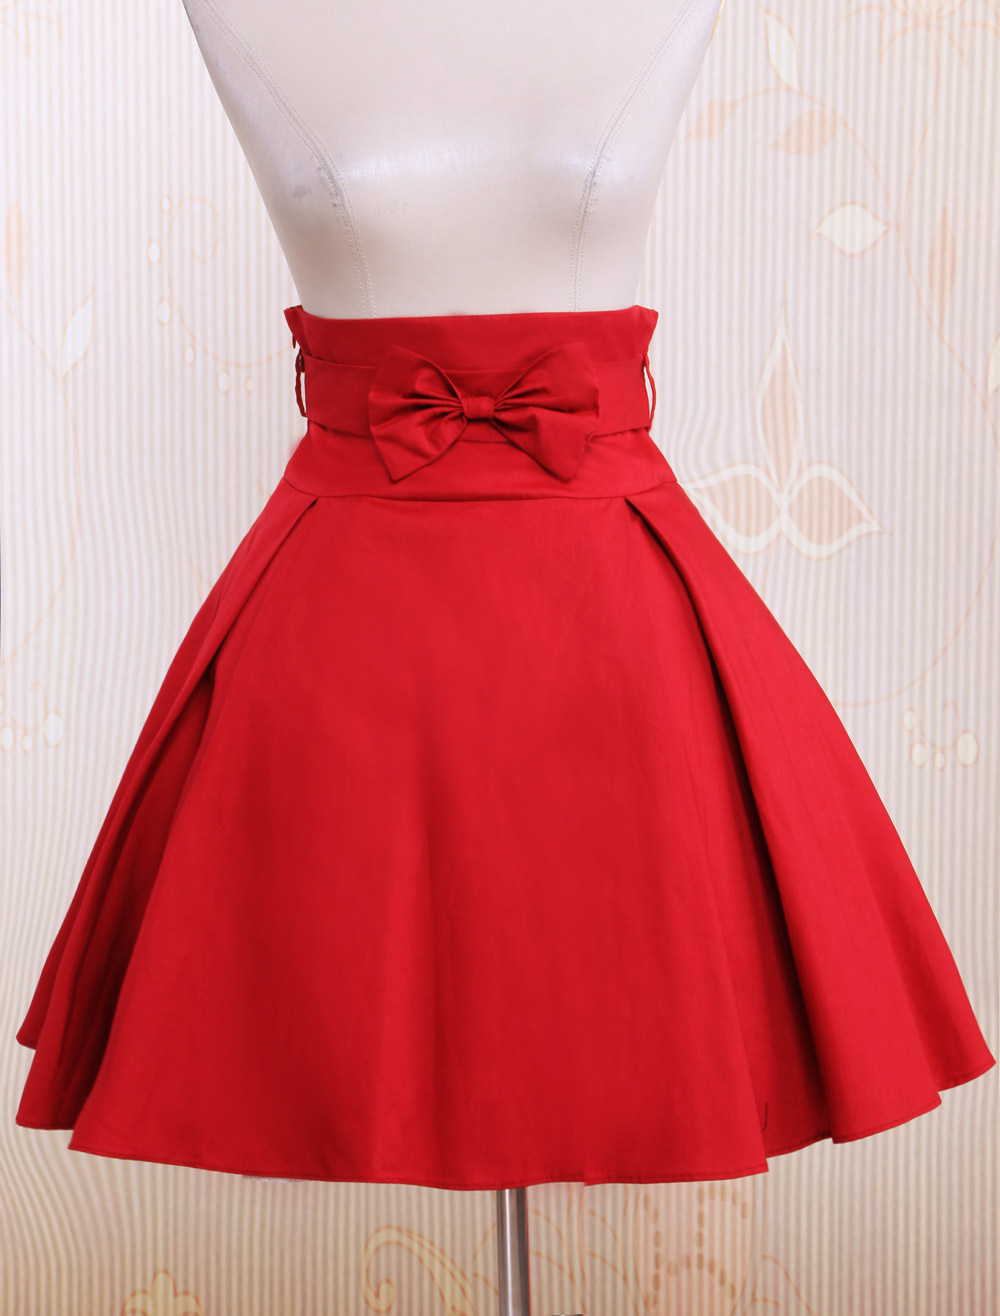 Simple Dark Red Bow Cotton Lolita Skirt - Milanoo.com